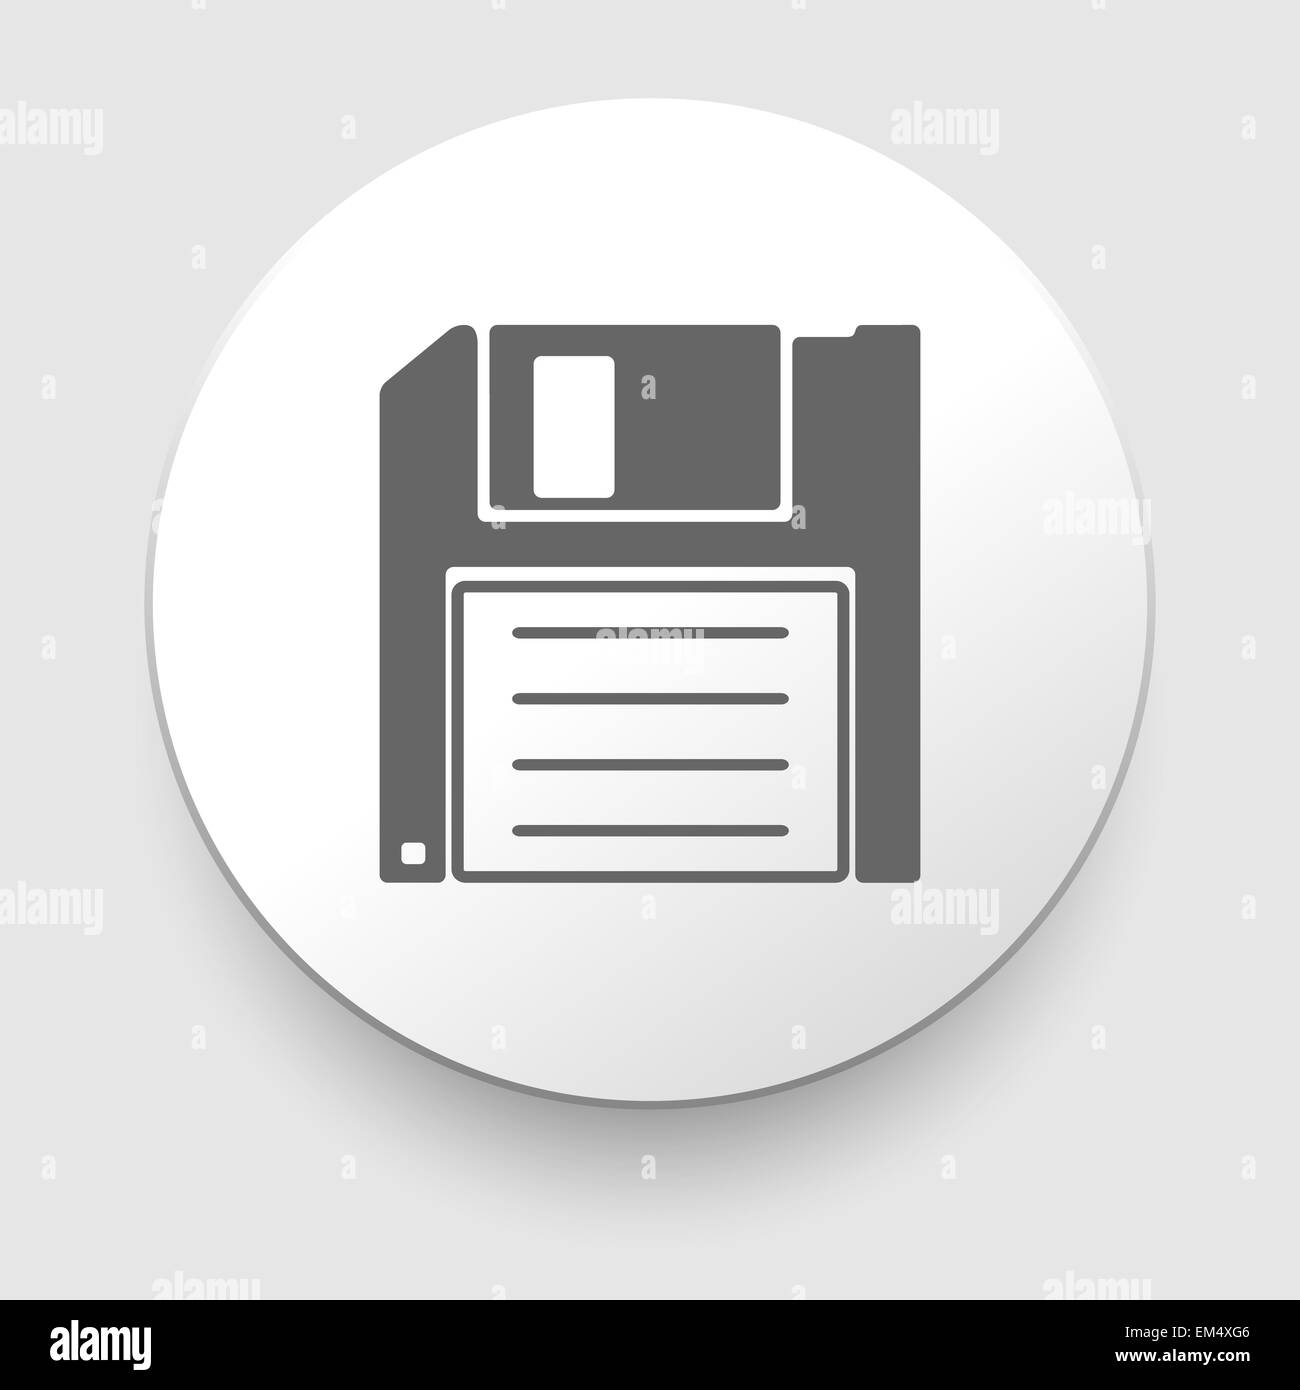 SymbolSpeichern - Diskette Stockfoto